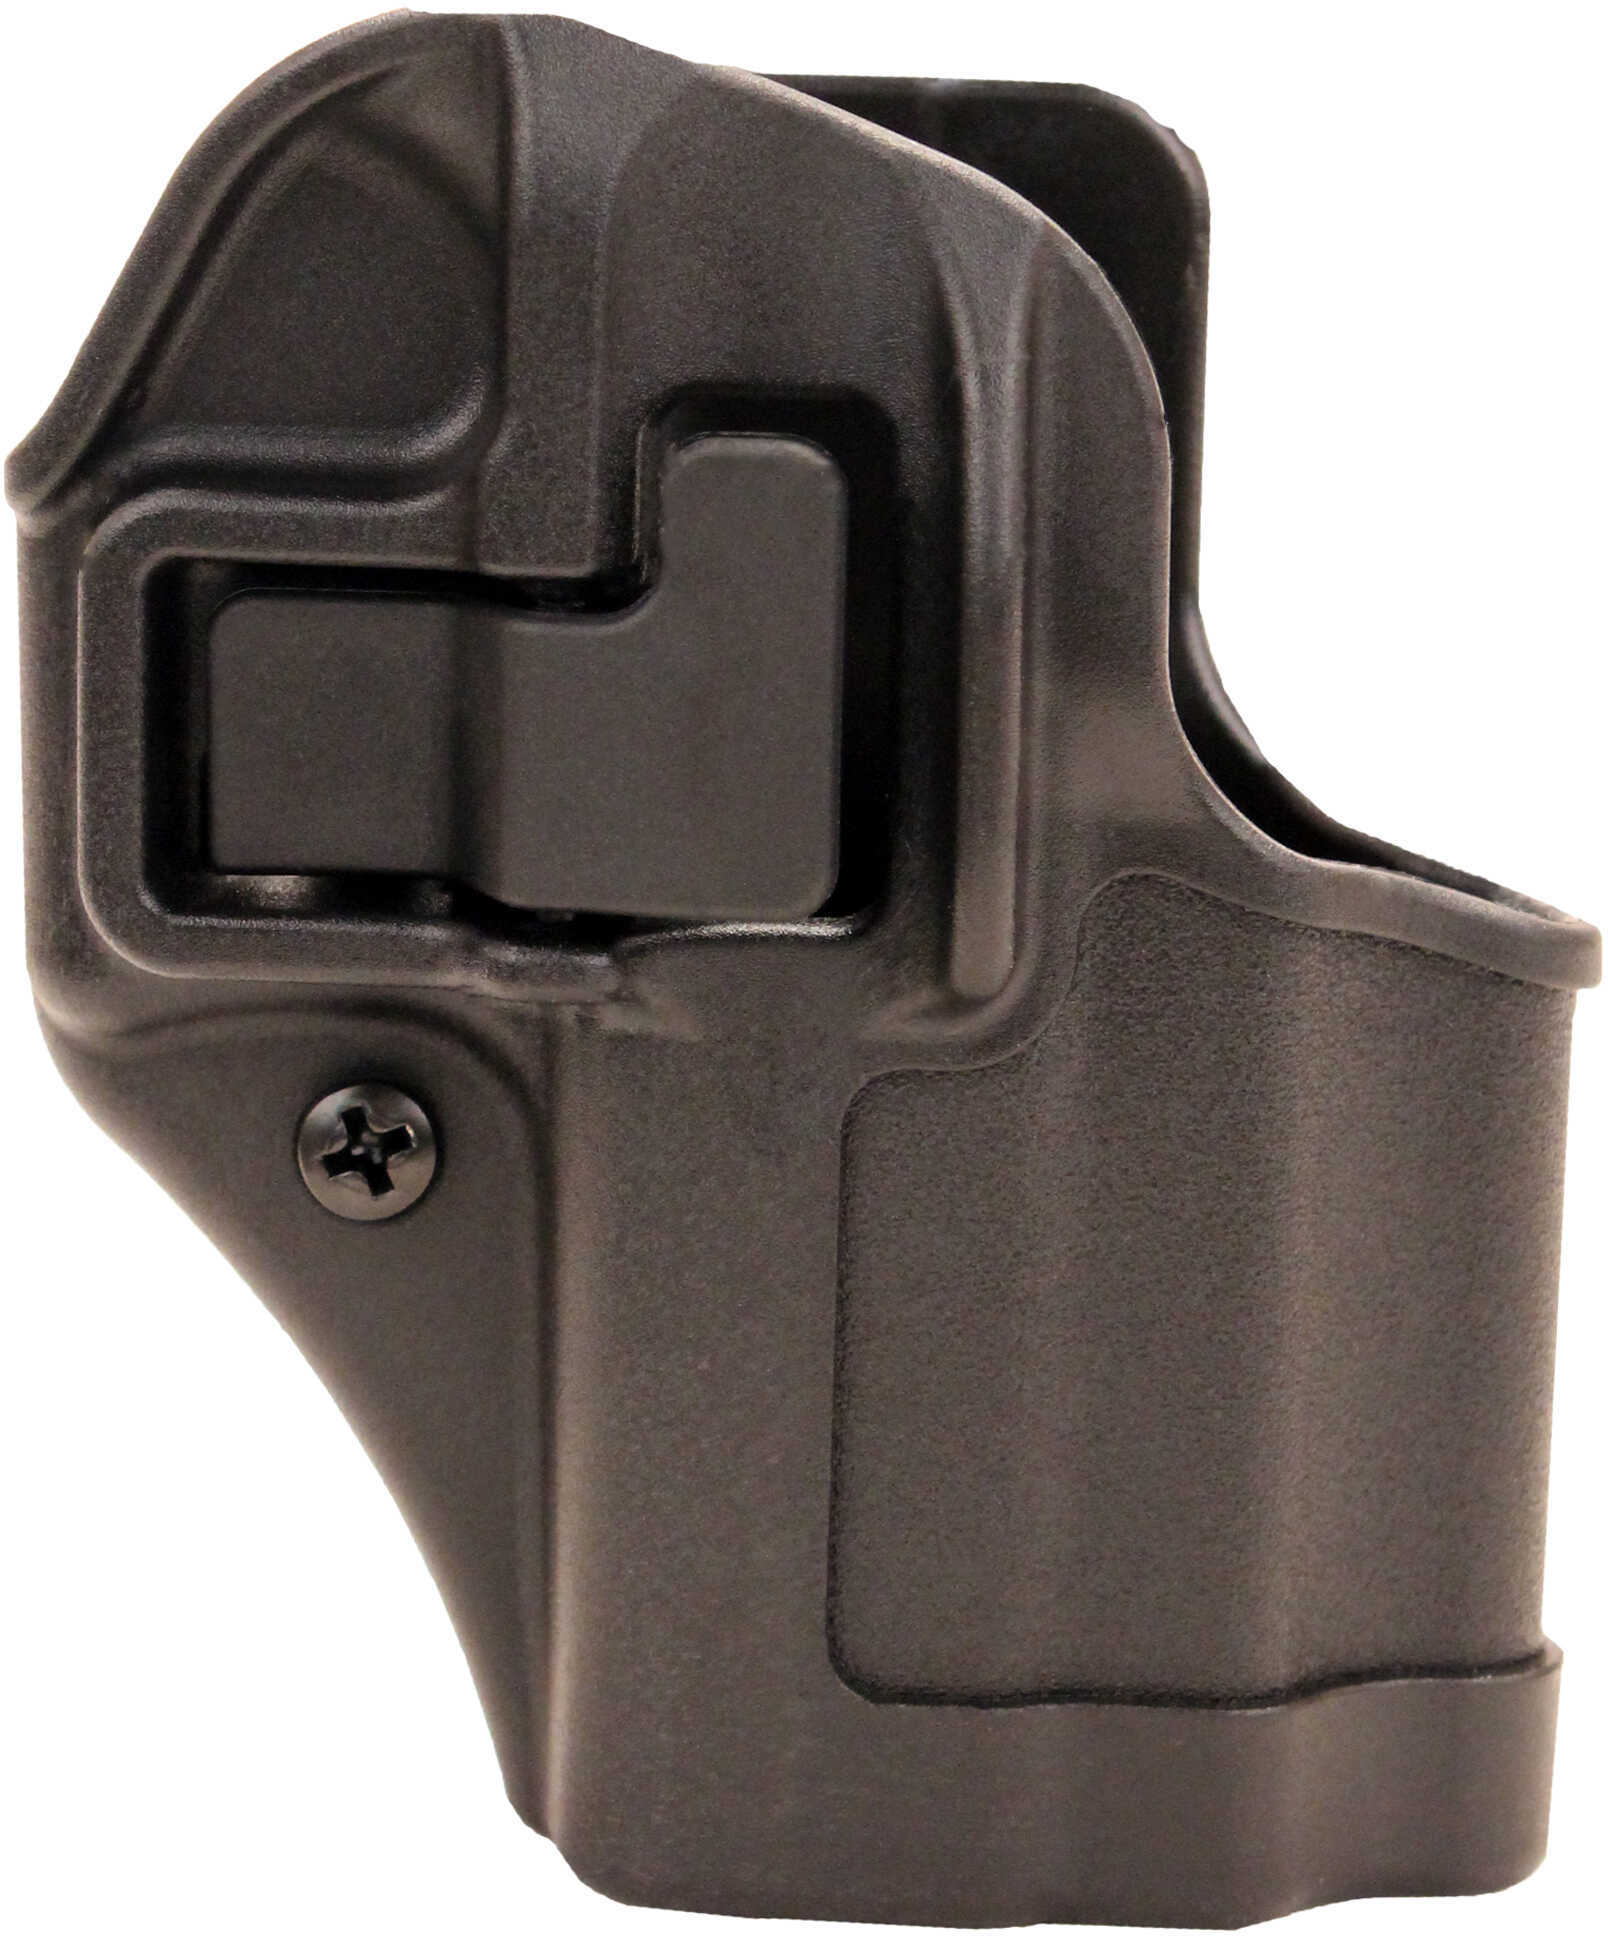 BlackHawk Backhawk Serpa Cqc Right Hand Holster For Glock 43